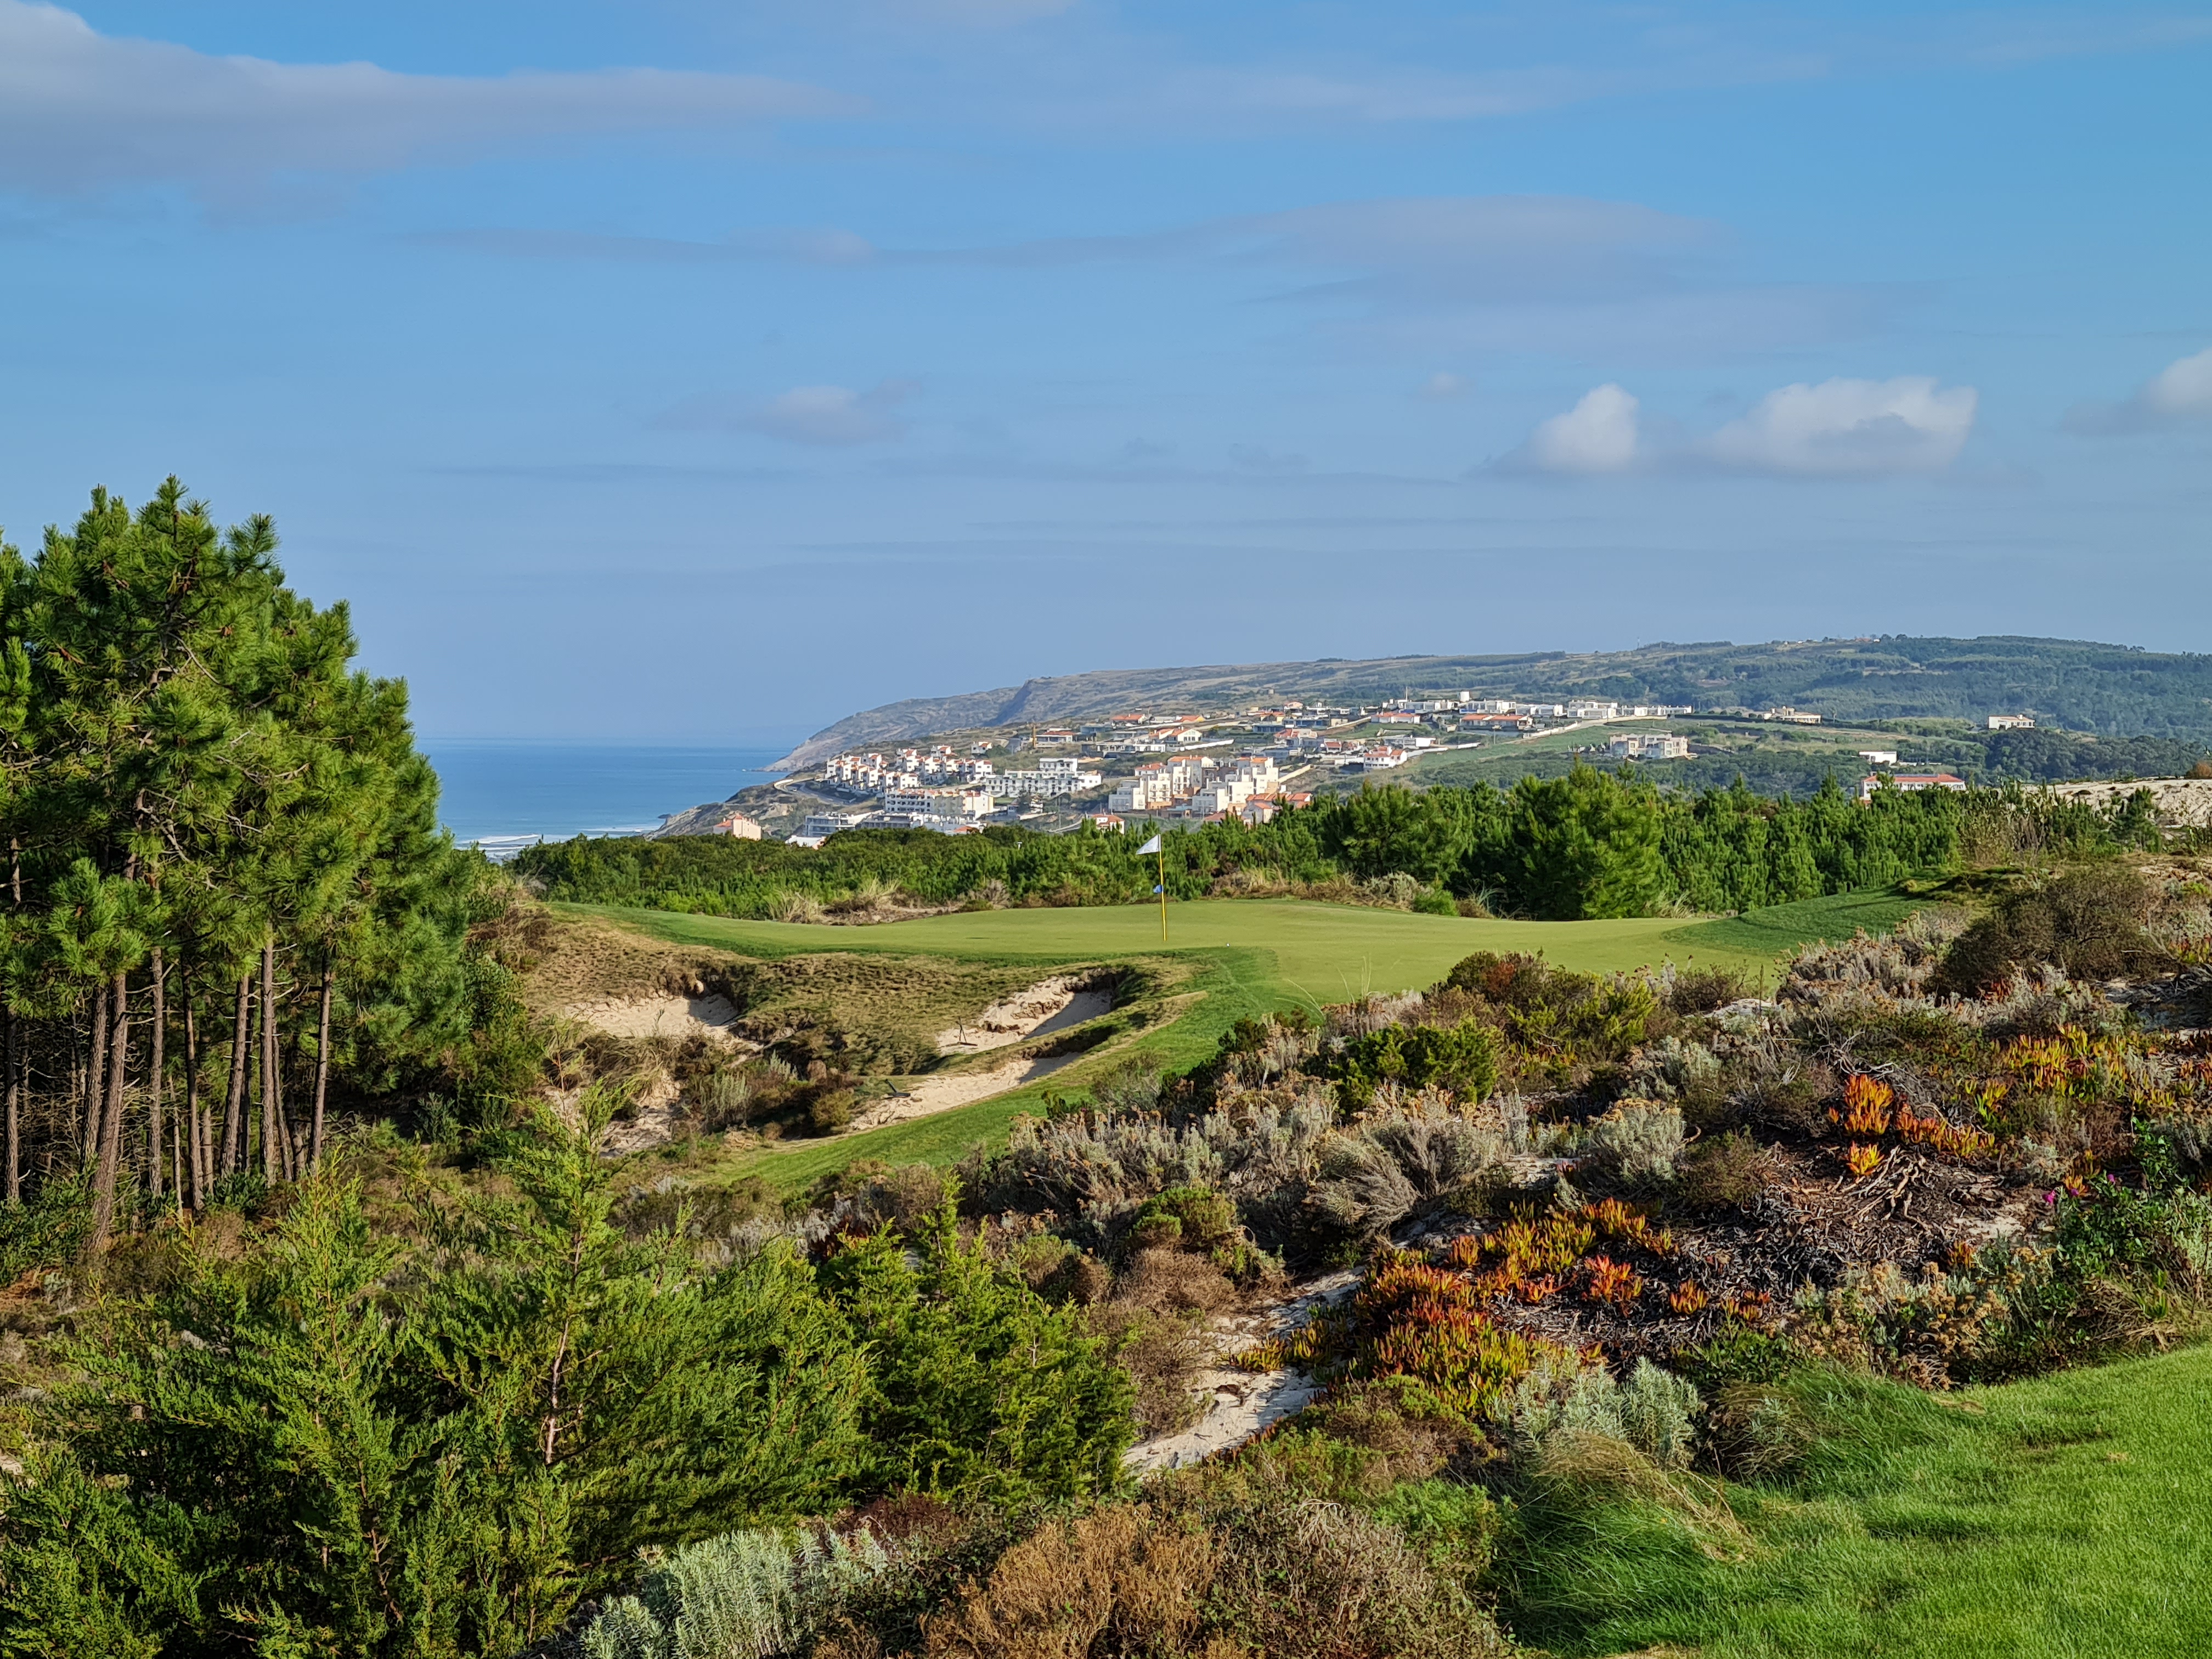 West Cliffs golf course in Lisbon